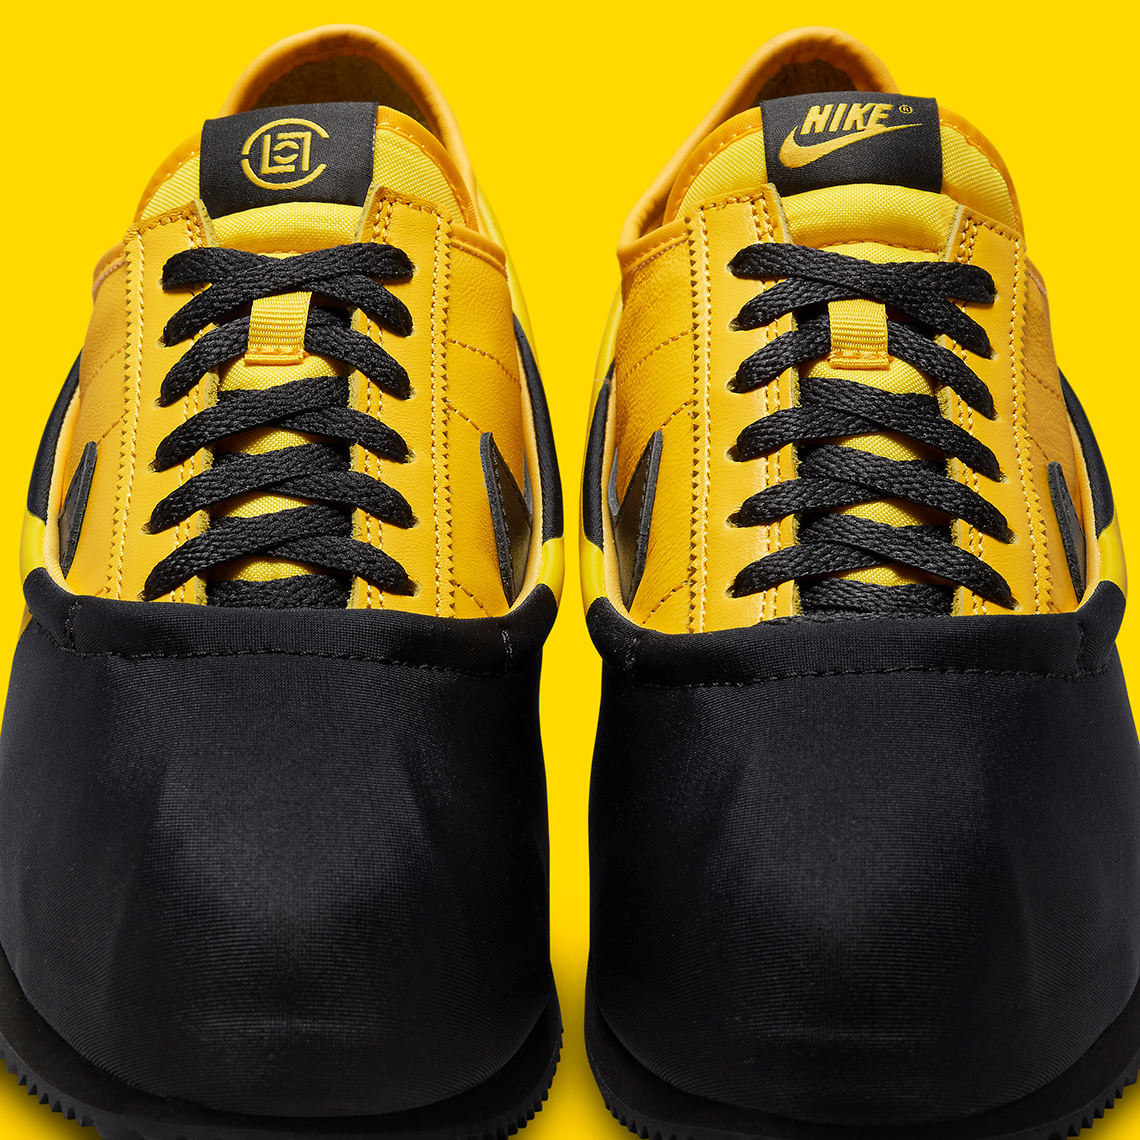 Clot Nike Cortez Clotez Yellow Black Dz3239 001 5